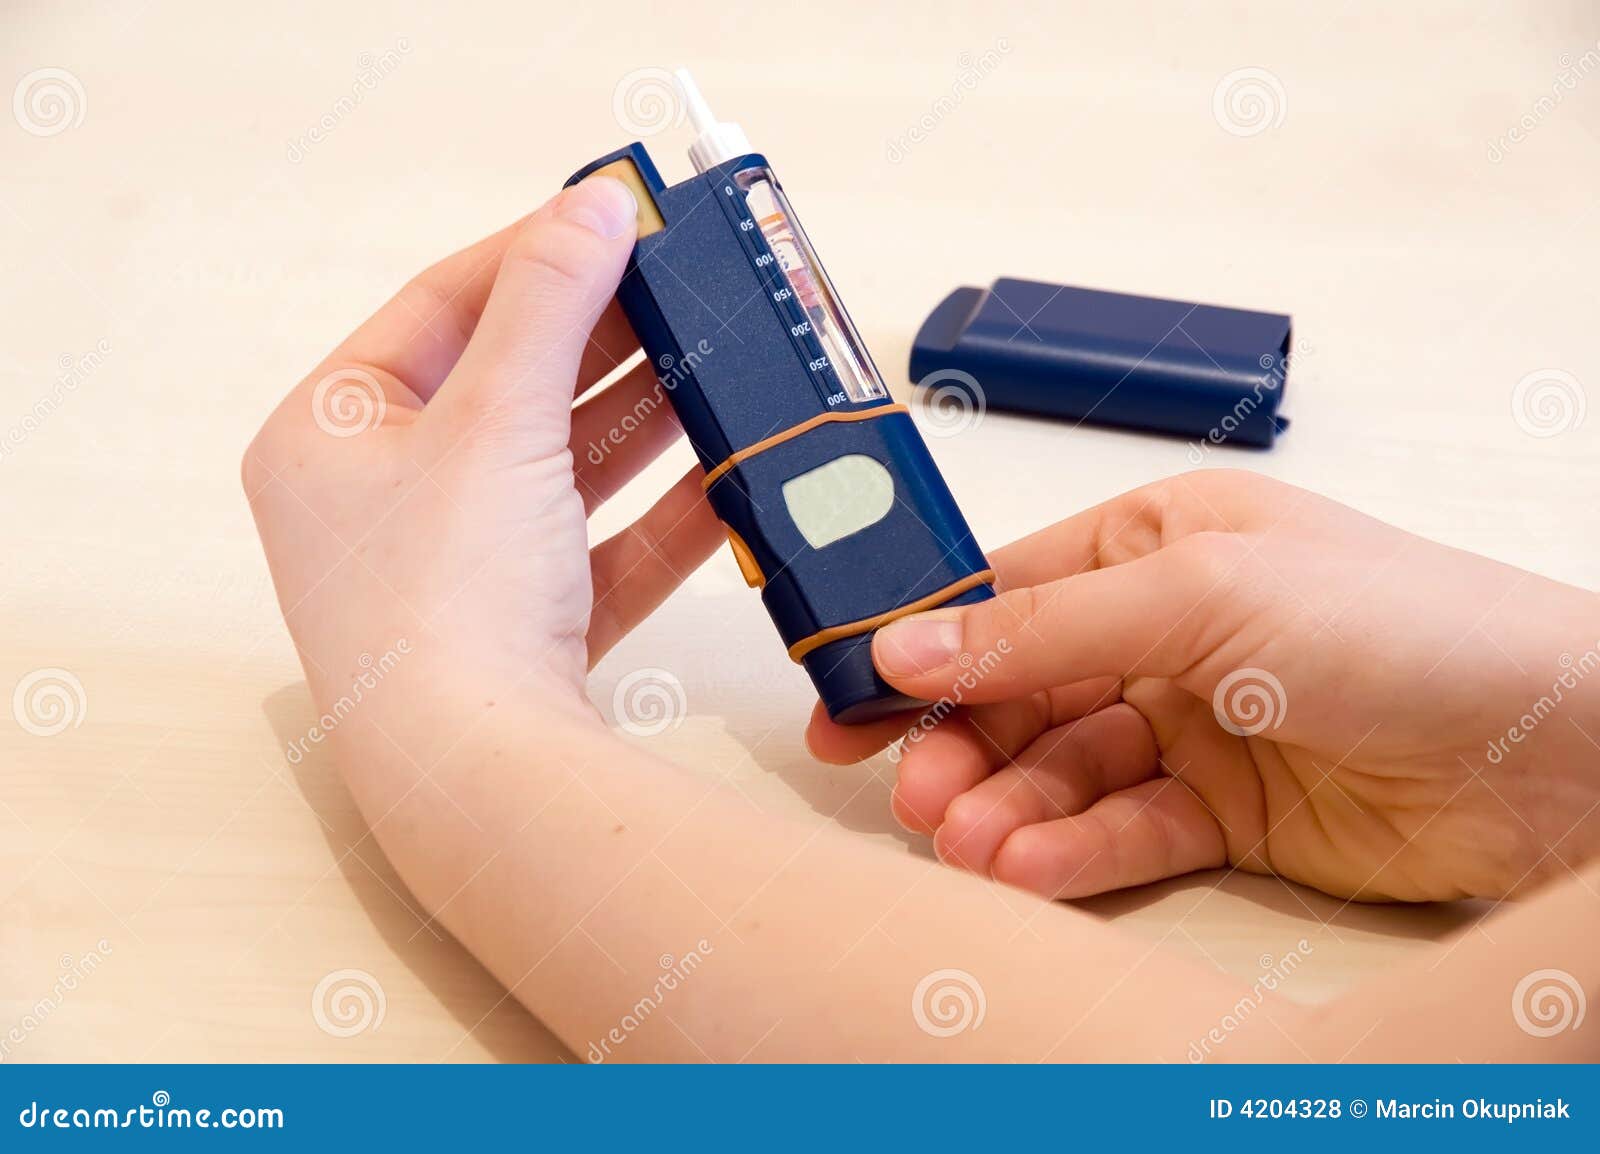 adjusting dose of insulin